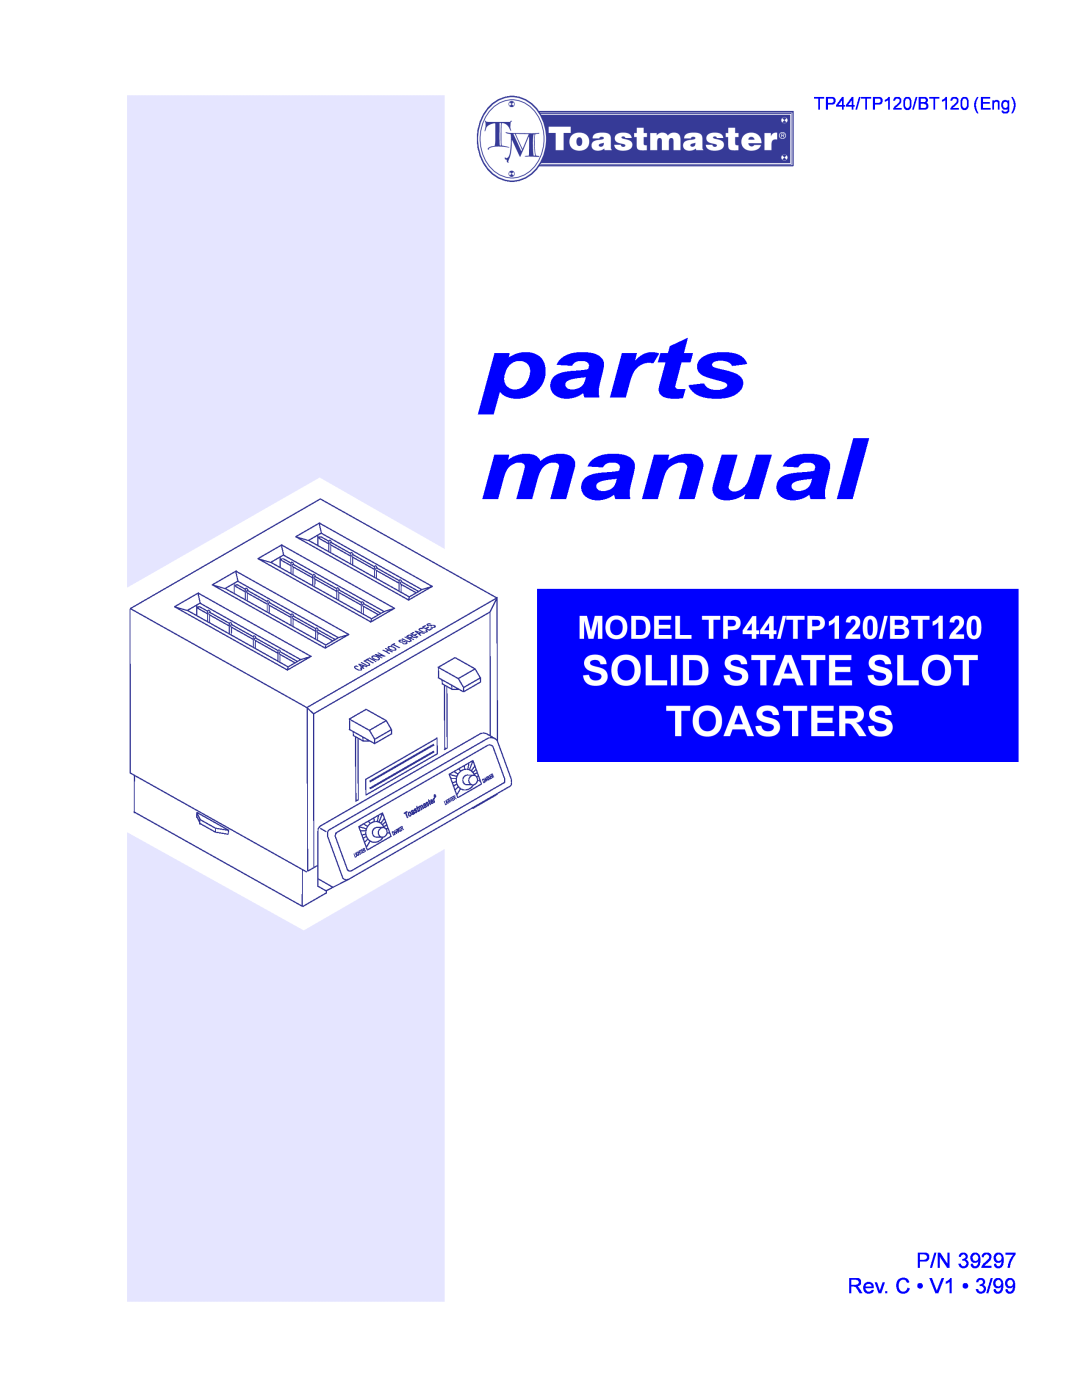 Toastmaster tp120, tp44 manual parts manual, Solid State Slot Toasters, MODEL TP44/TP120/BT120, P/N 39297 Rev. C V1 3/99 